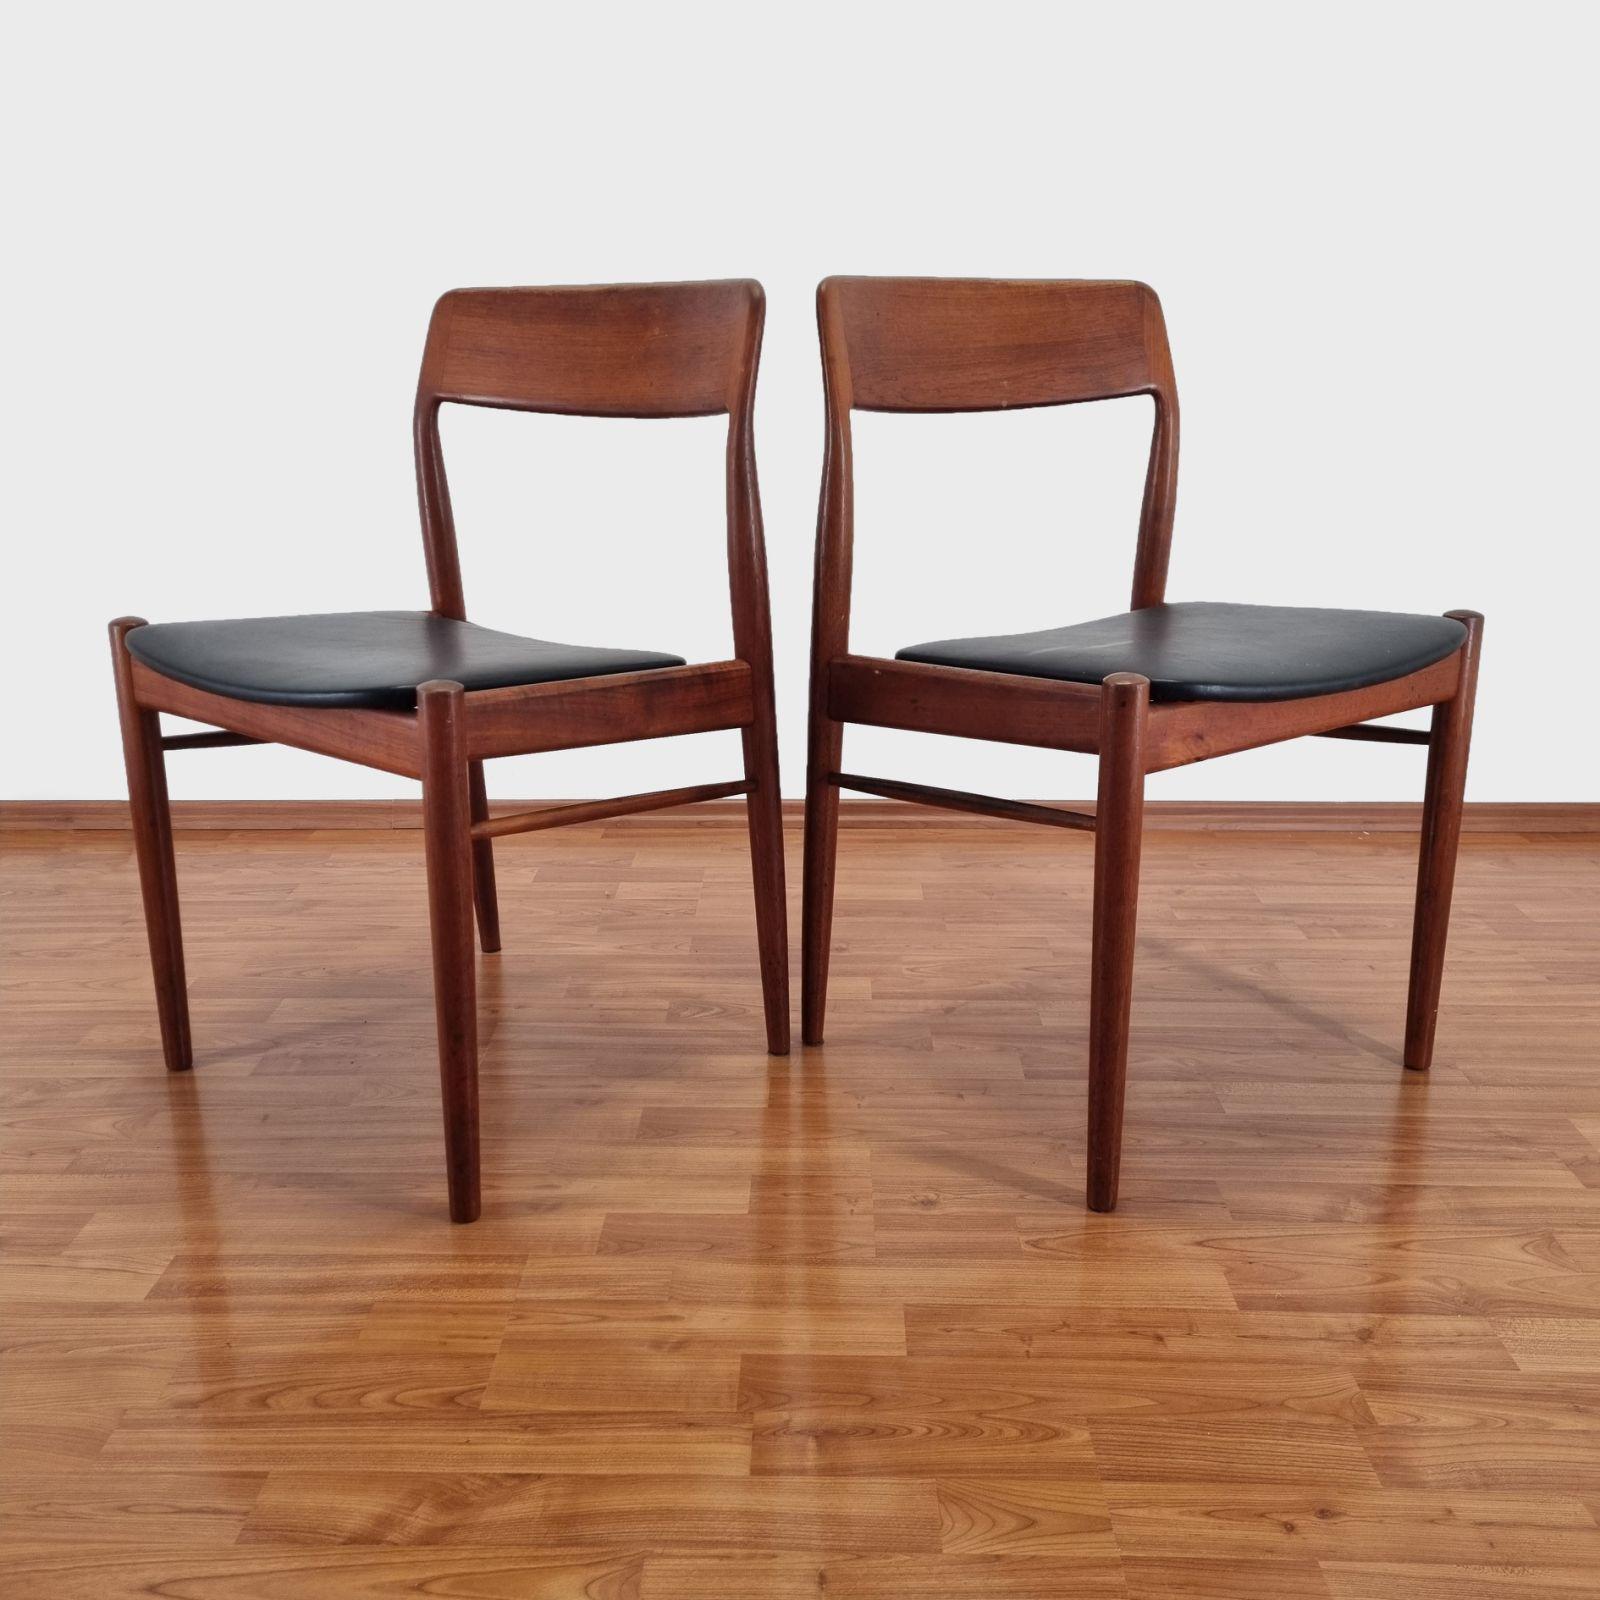 Scandinavian Modern Teak Dining Chairs, Design By Niels Otto Möller, Denmark 60s For Sale 6